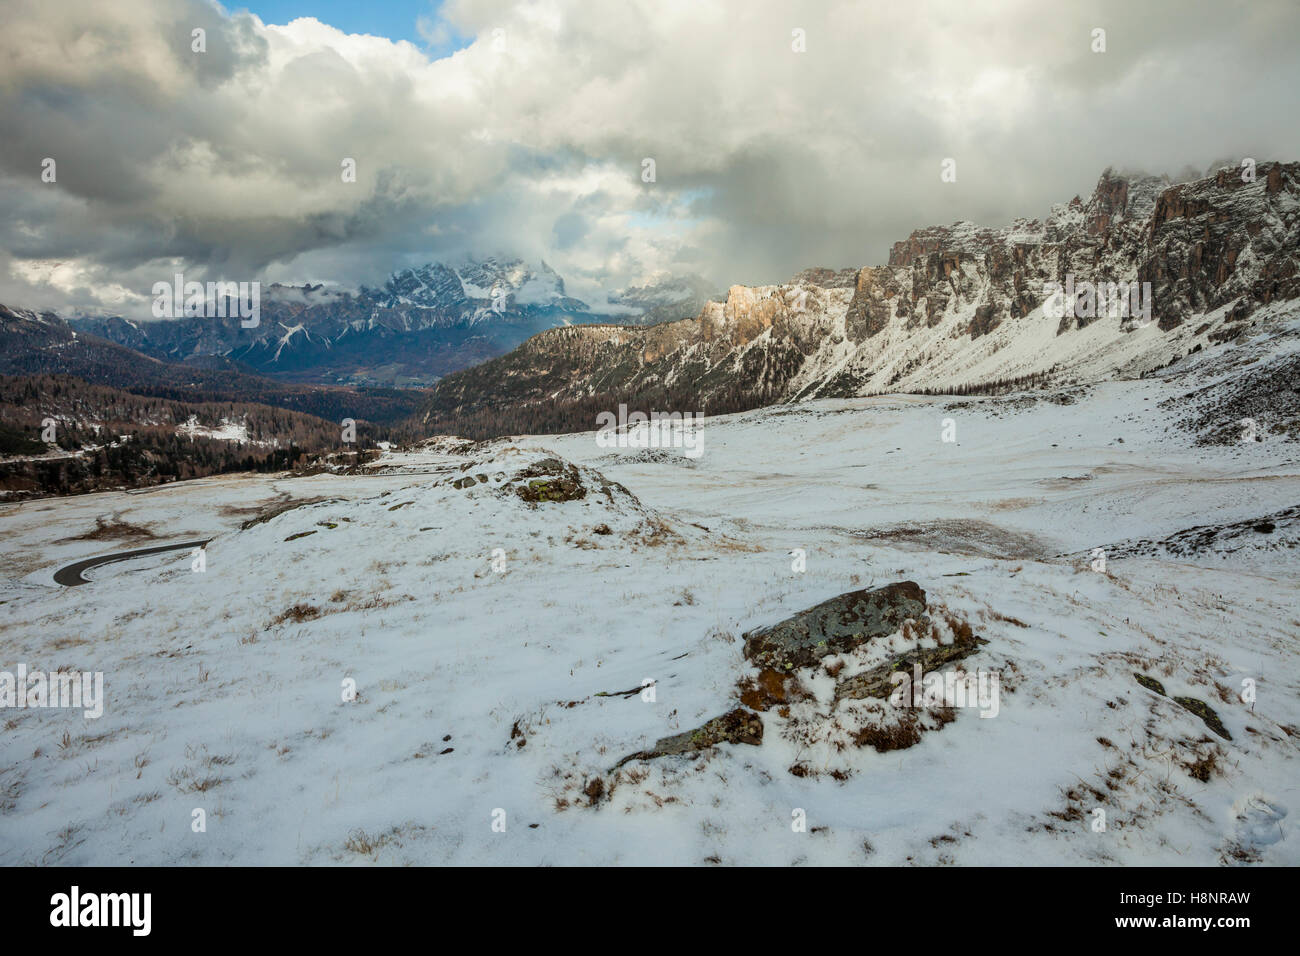 Early snow at Giau pass, Dolomites, Italy. Stock Photo